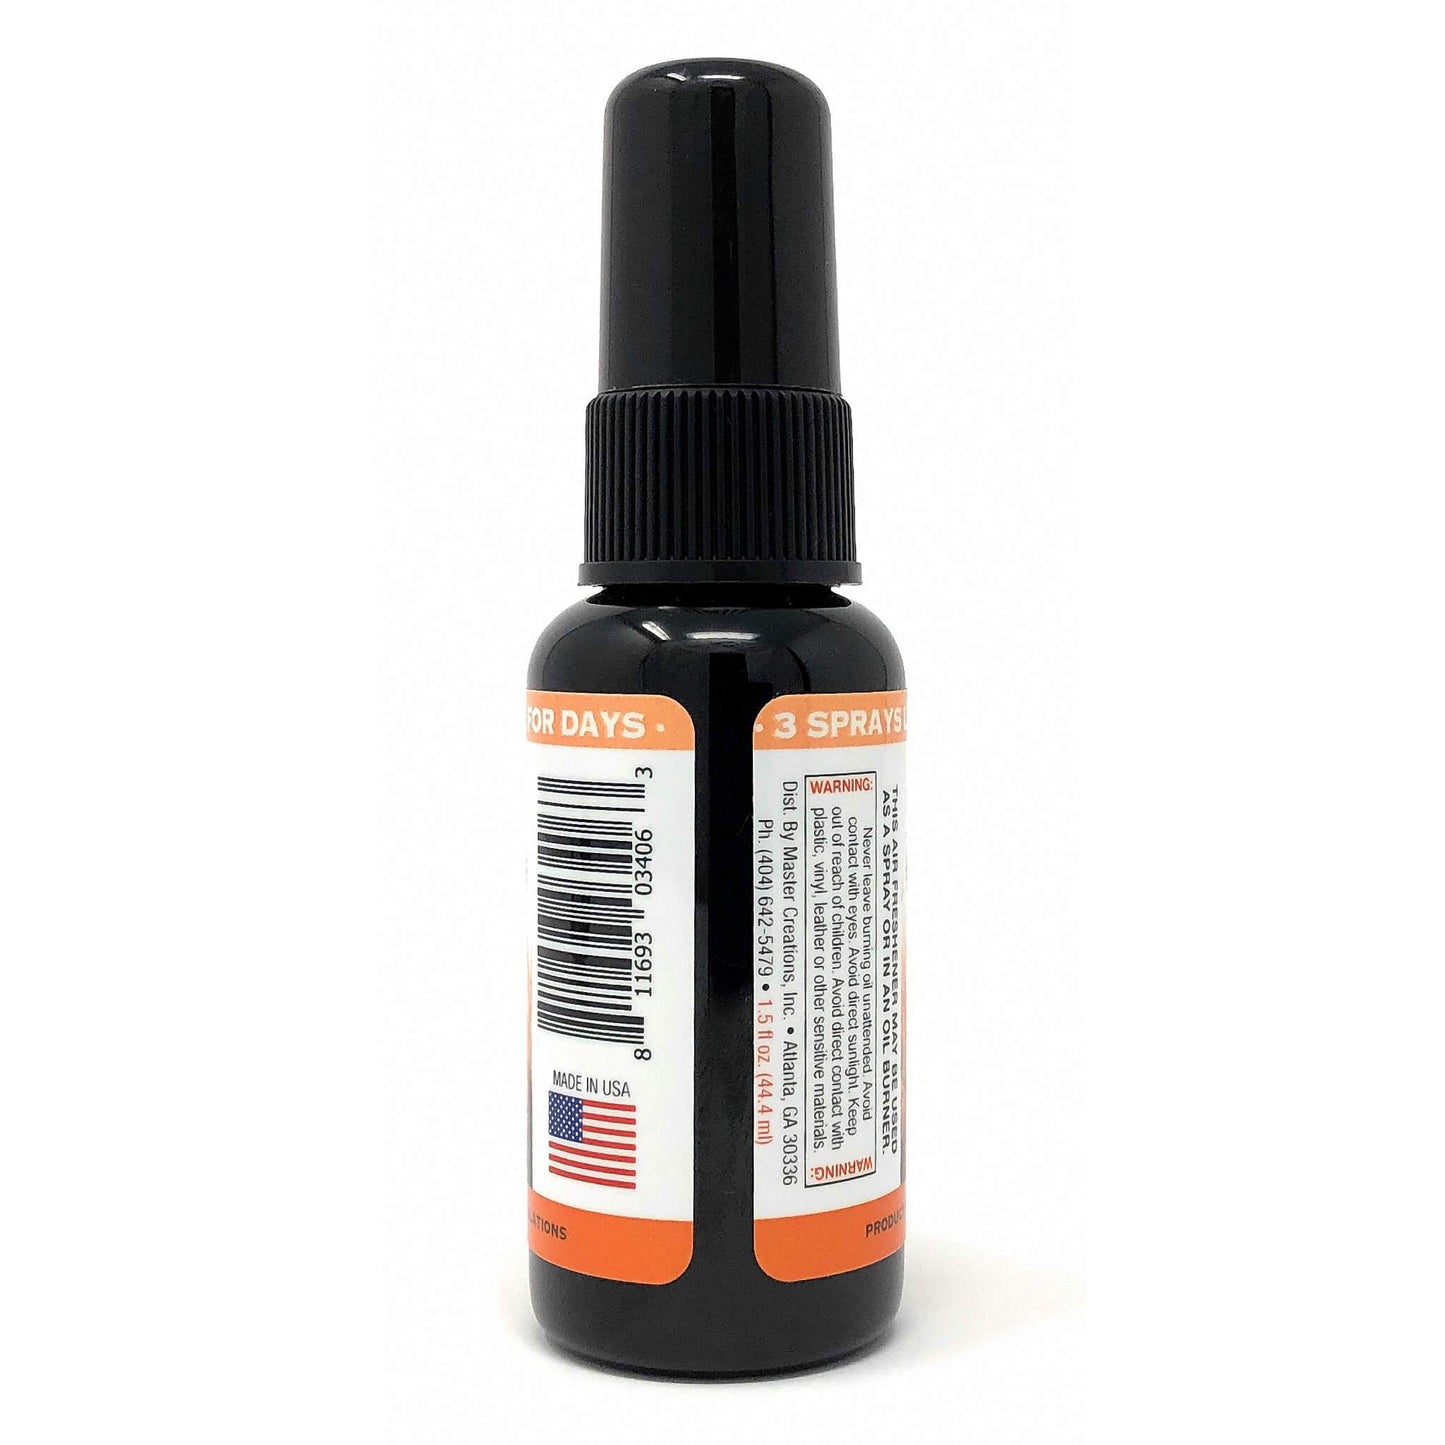 Apricot Vanilla Spray Air Freshener Bundle (3 Pack)